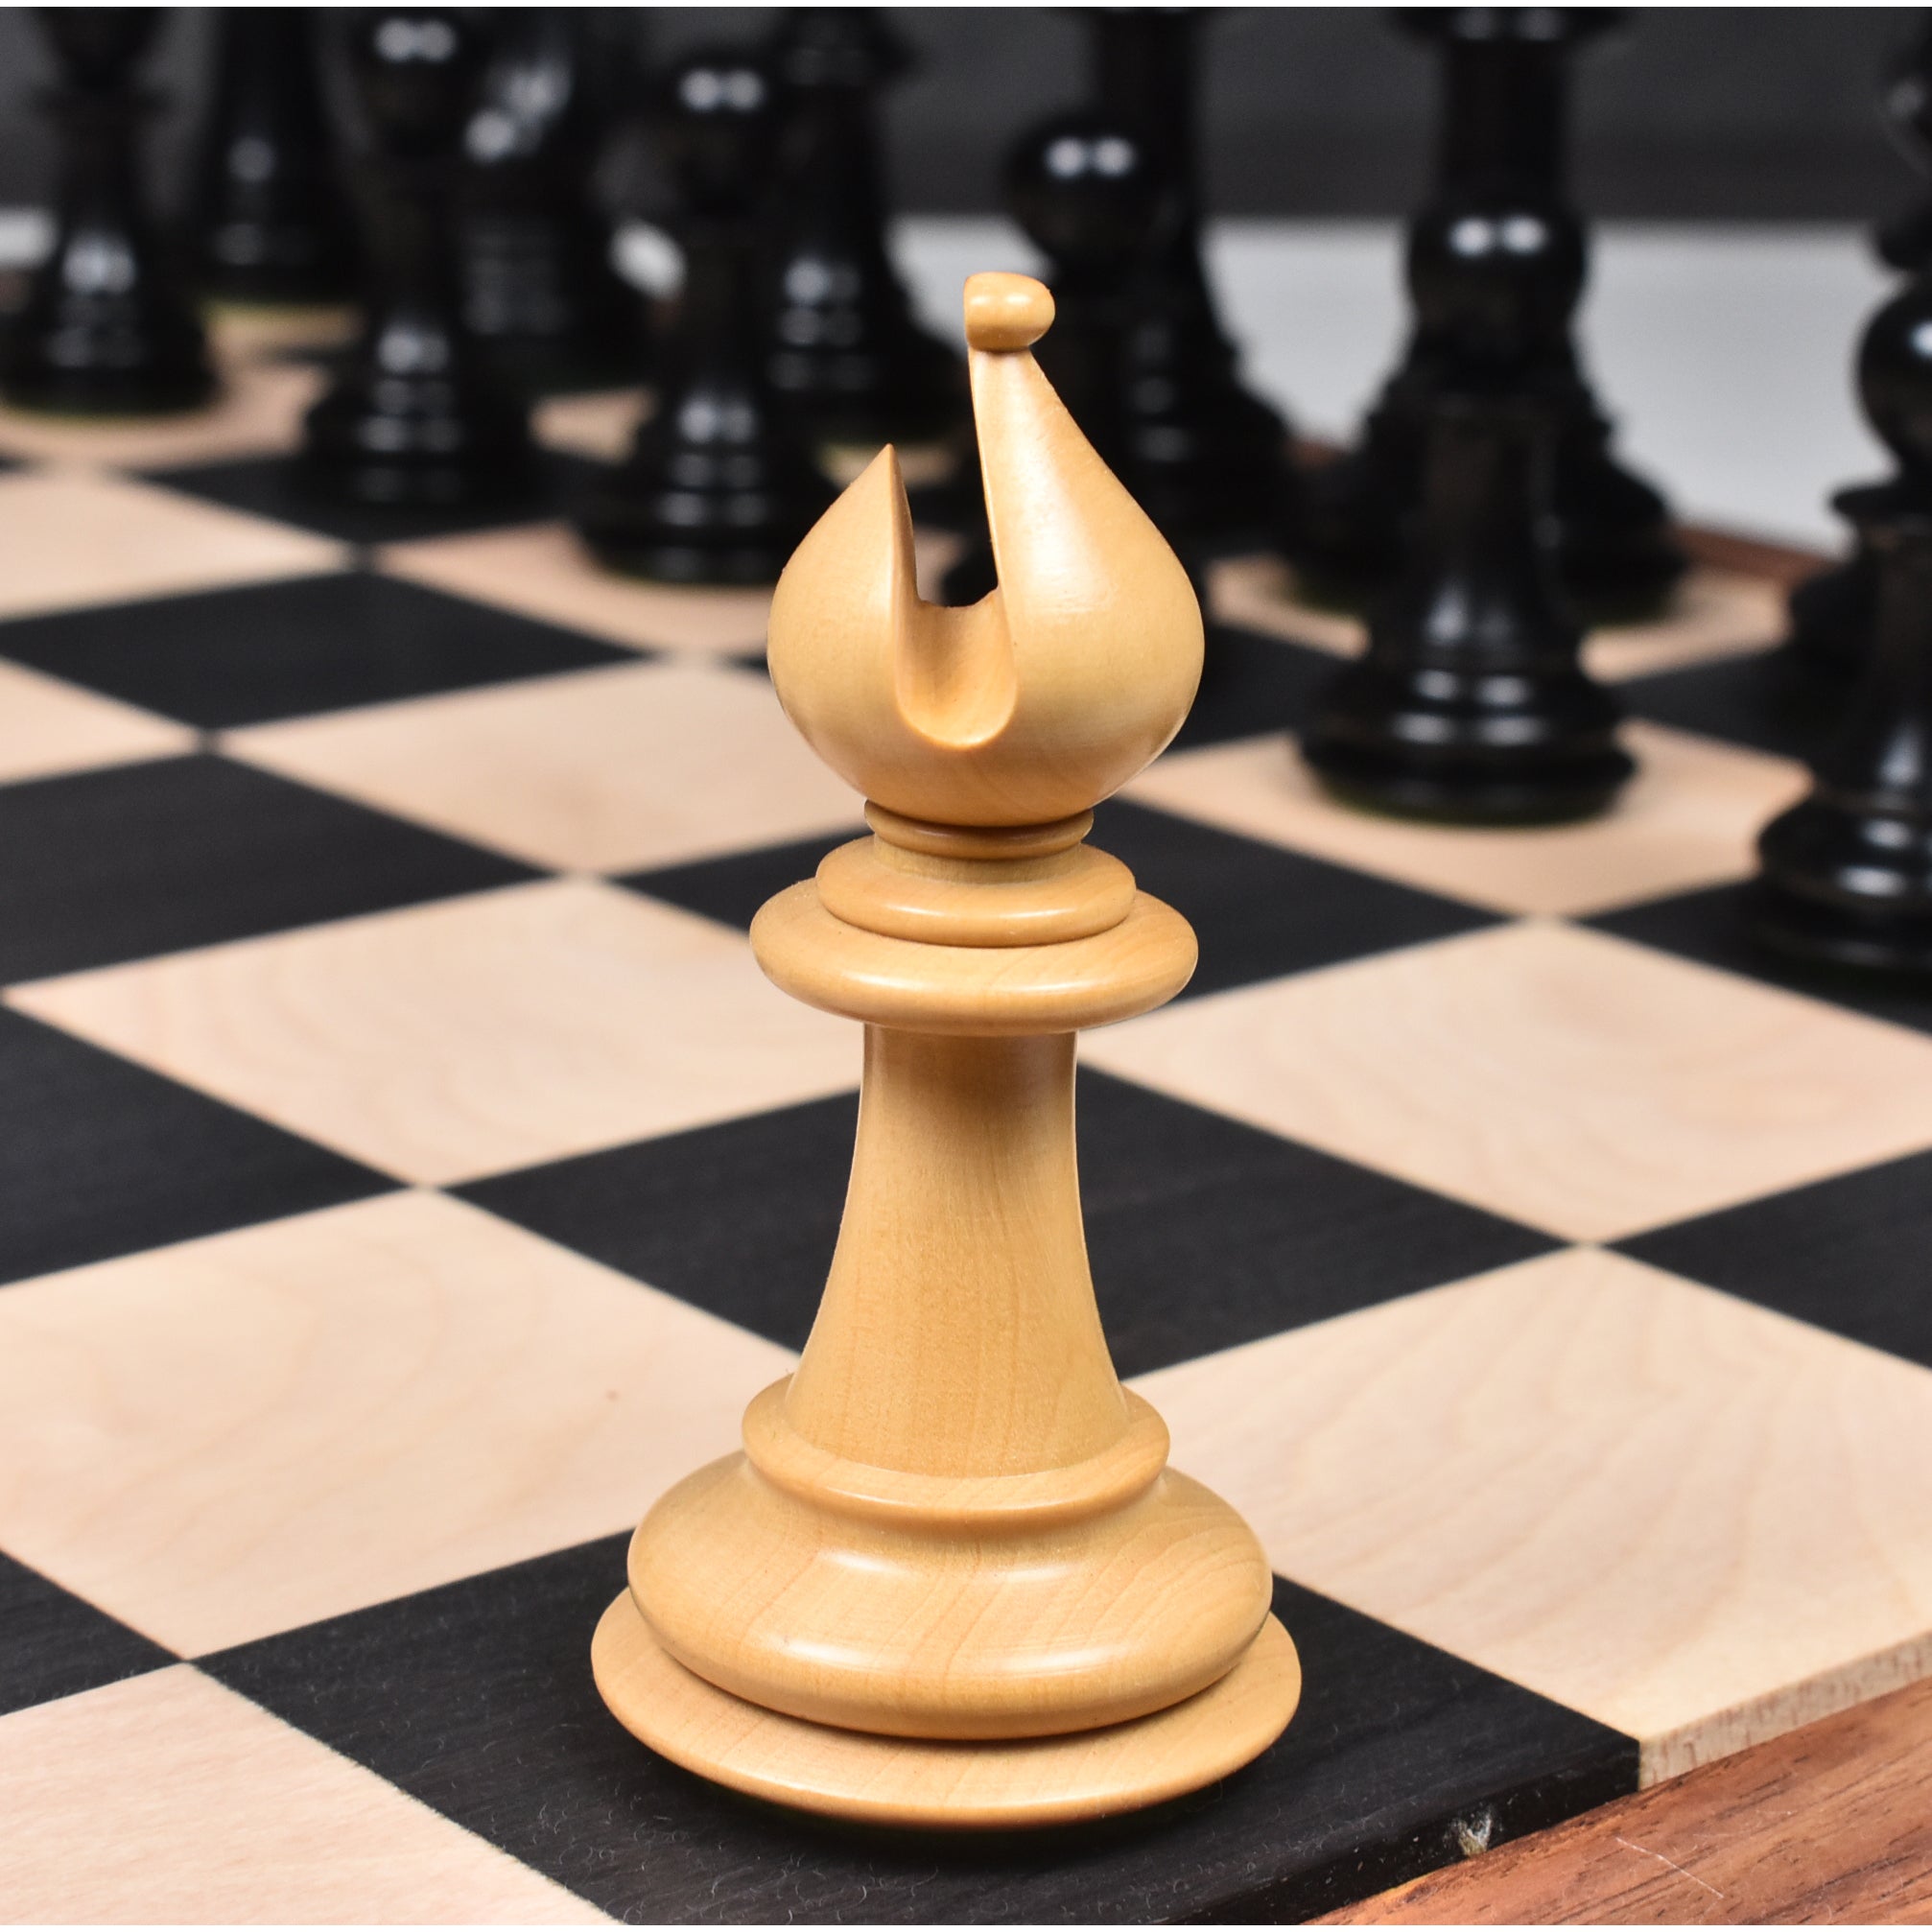 King Blue  Staunton Chess Set Automatic – Thomas Earnshaw